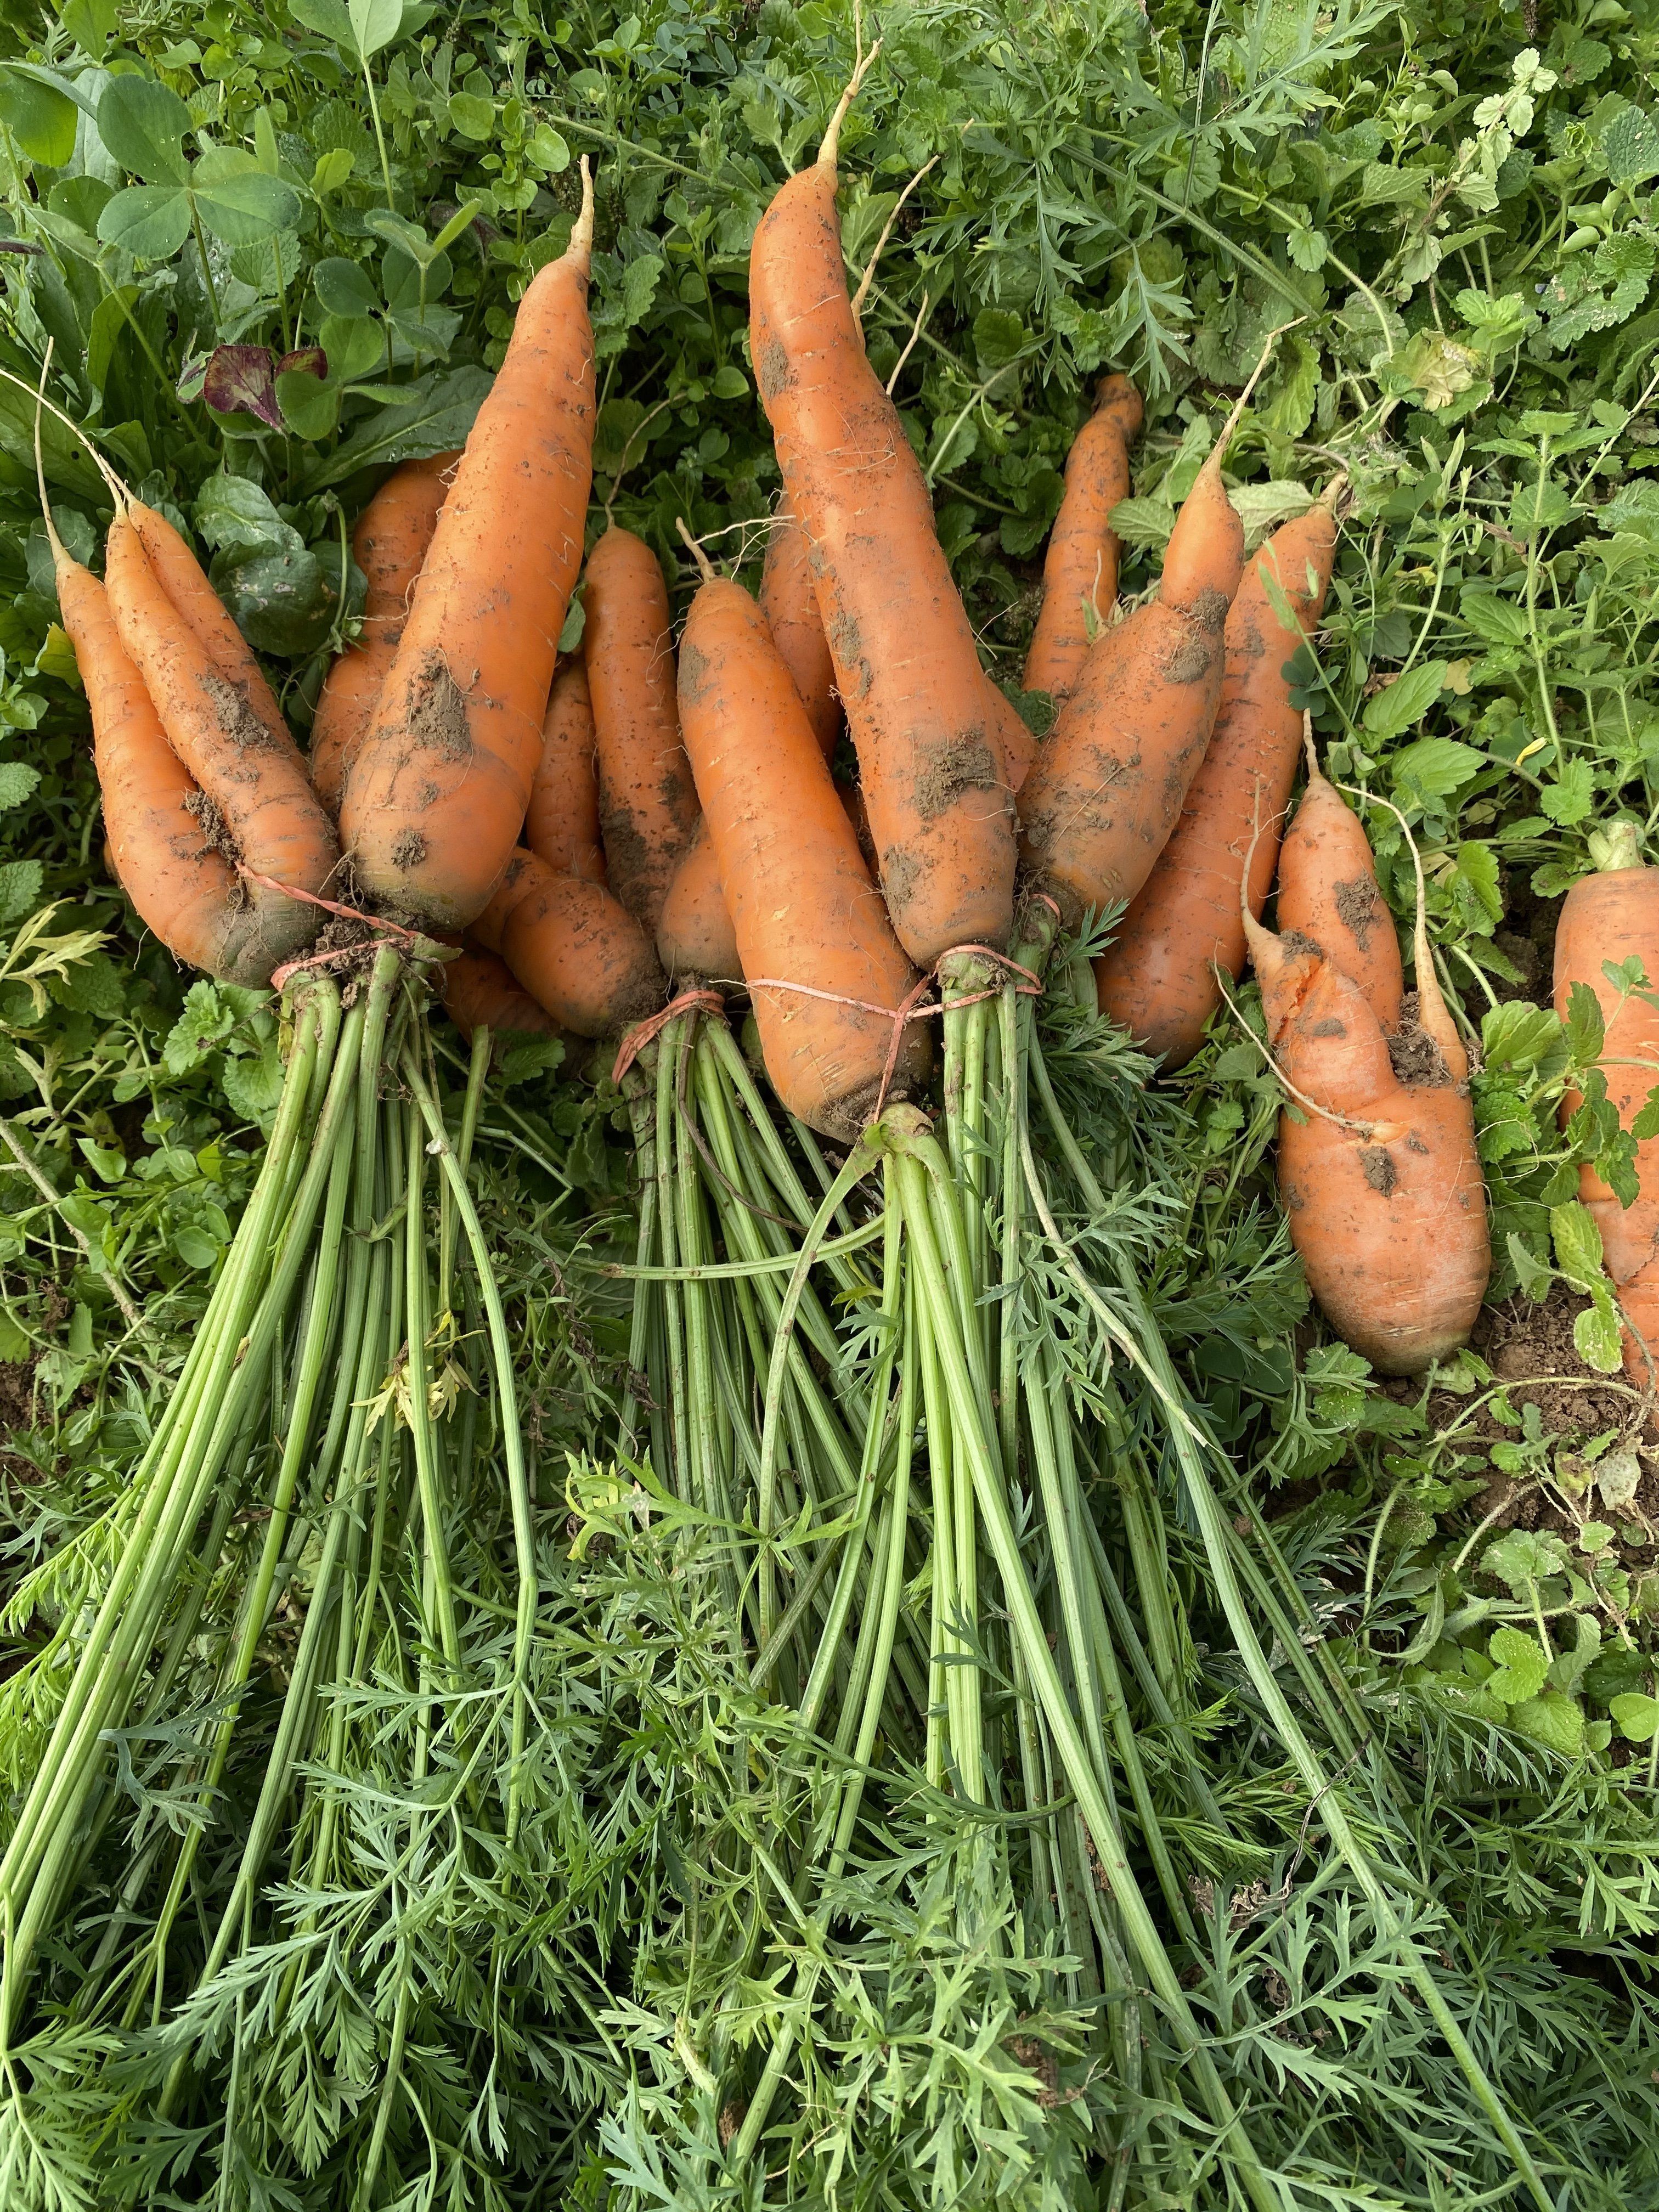 Previous Happening: Autumn Week 7:  Carrots